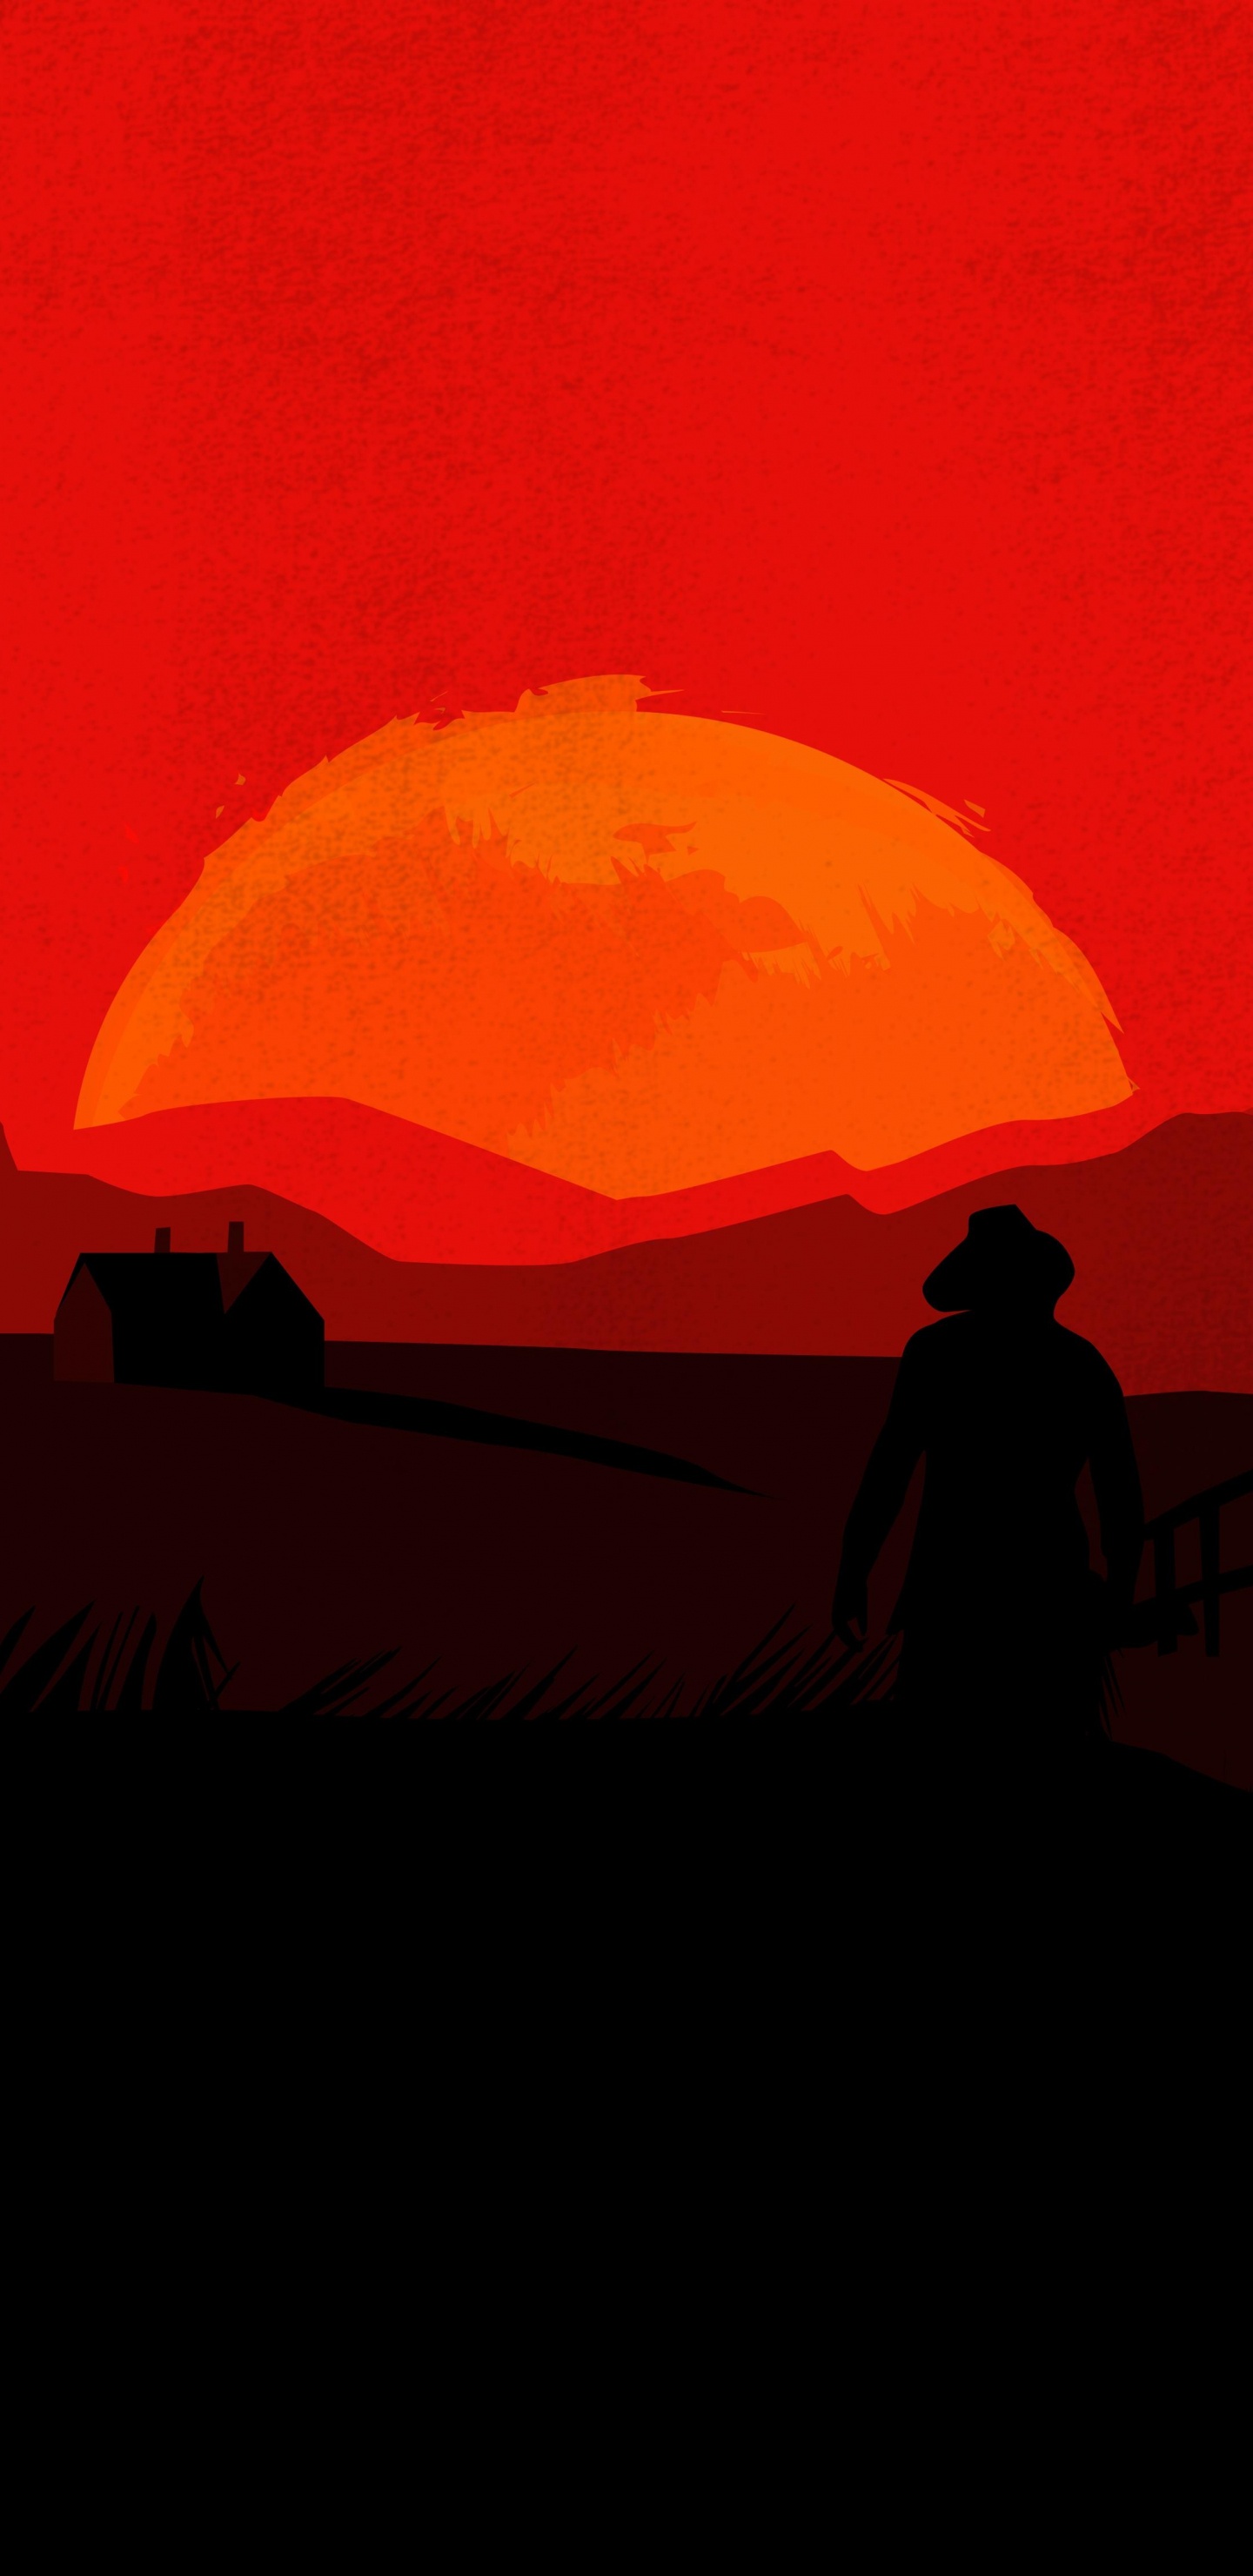 Red Dead Redemption 2, Red Dead Redemption, Afterglow, Sonnenuntergang, Sonnenaufgang. Wallpaper in 1440x2960 Resolution